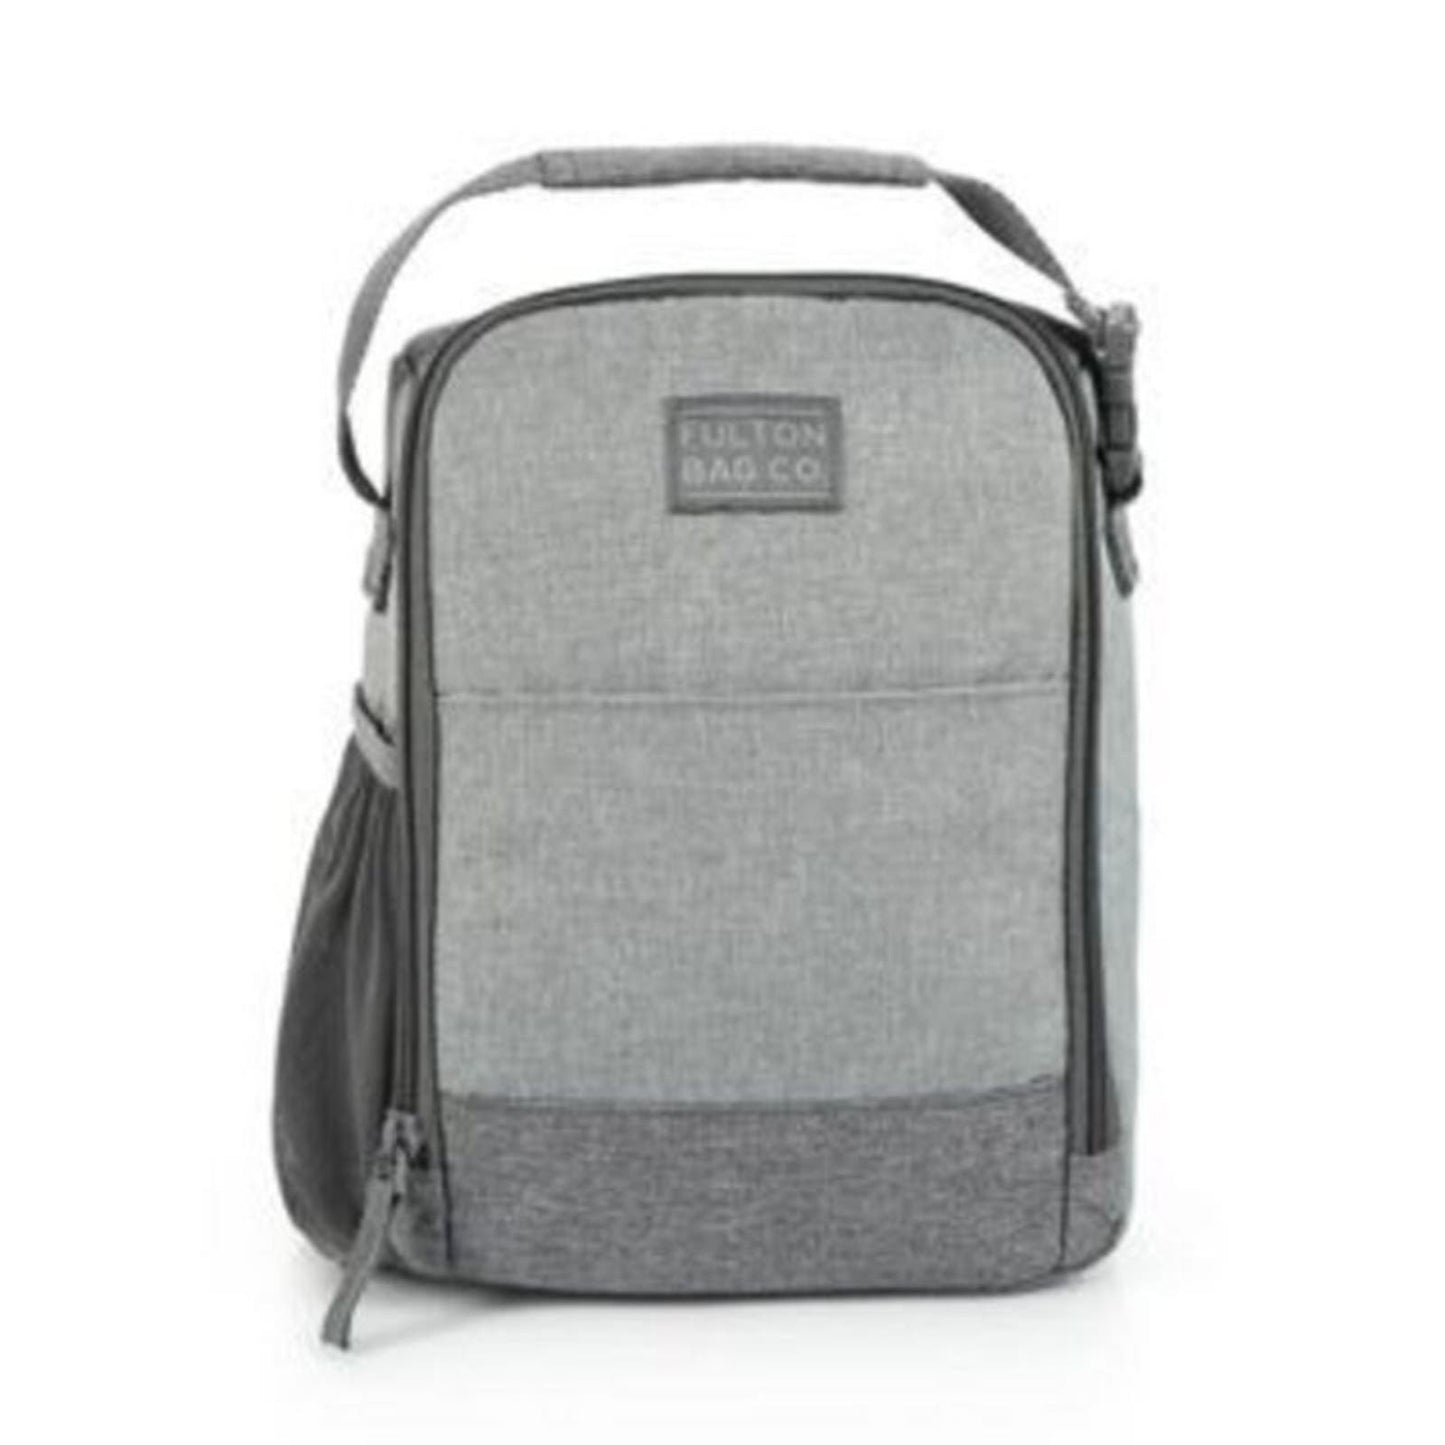 Fulton Bag Co. Flip Down Lunch Bag Gray